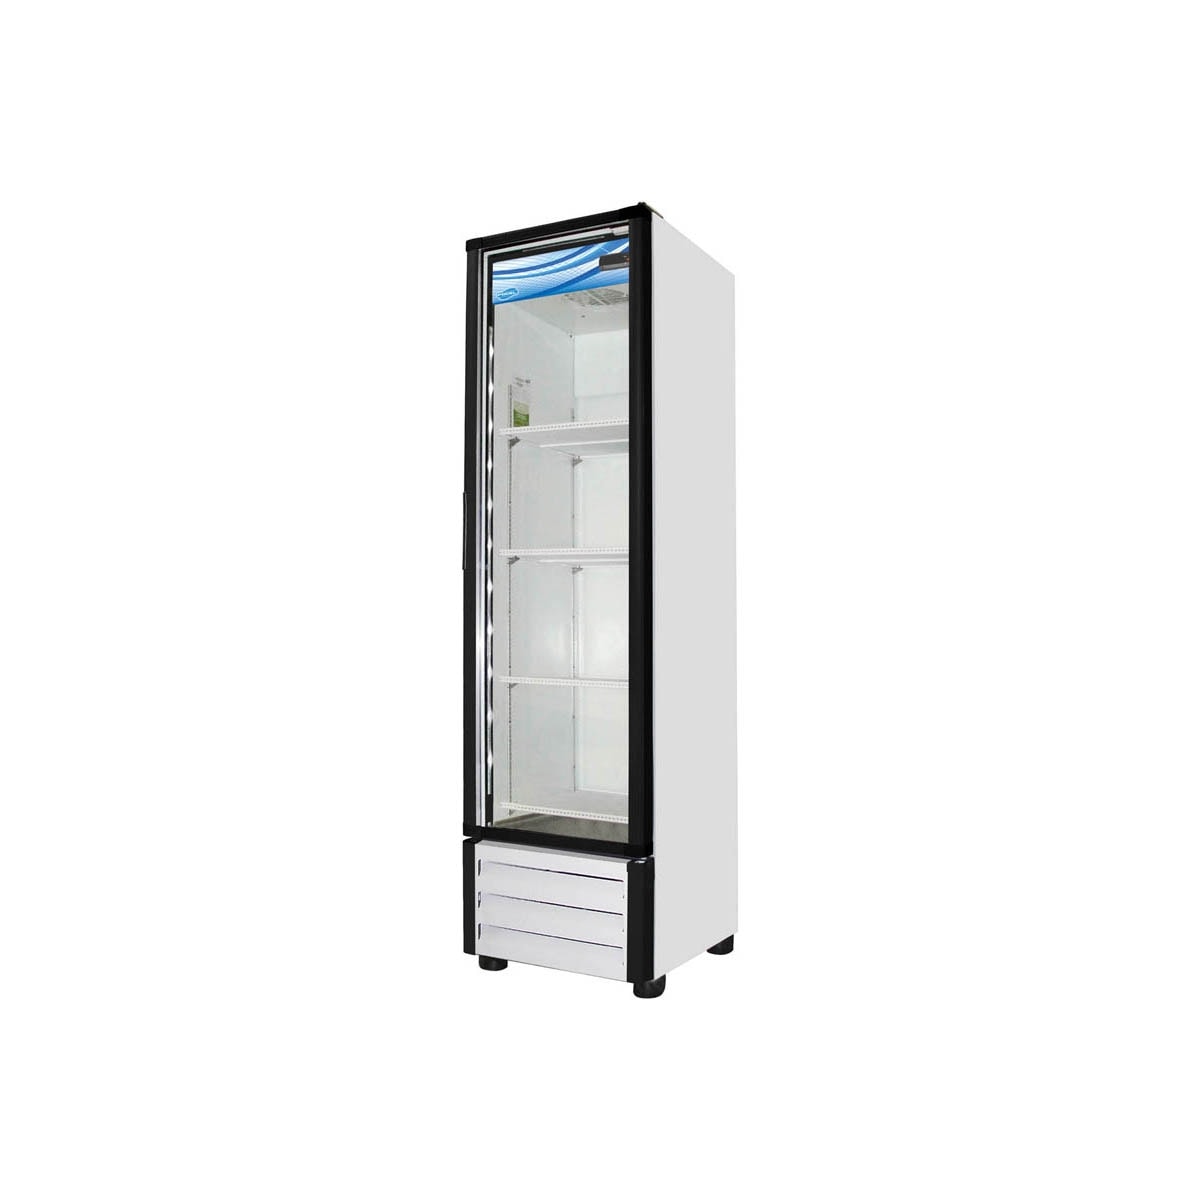 Fogel USA XS-10-HC-US Merchandiser Refrigerator